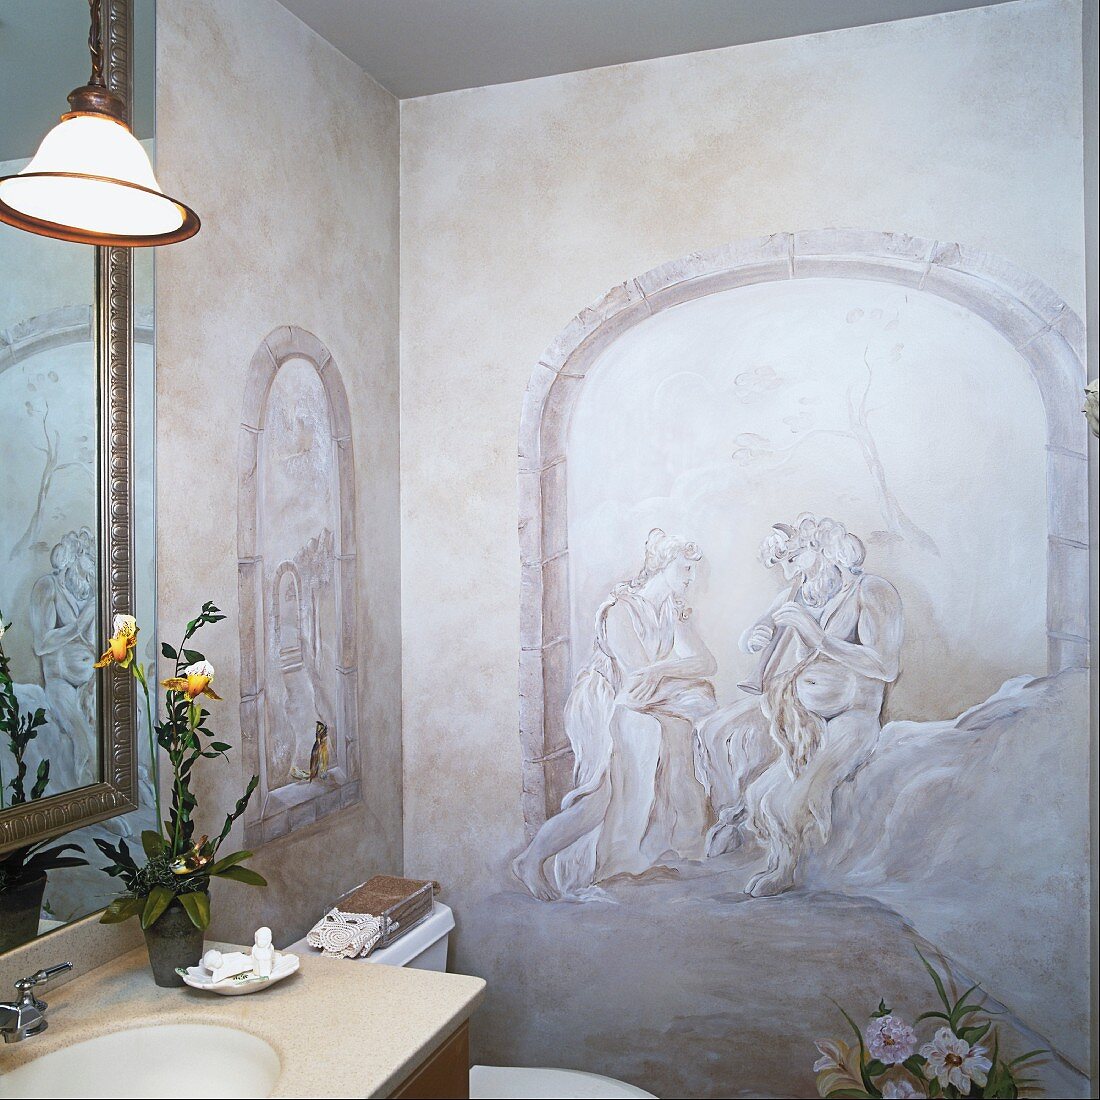 Wall of bathroom with mythological trompe l'oeil